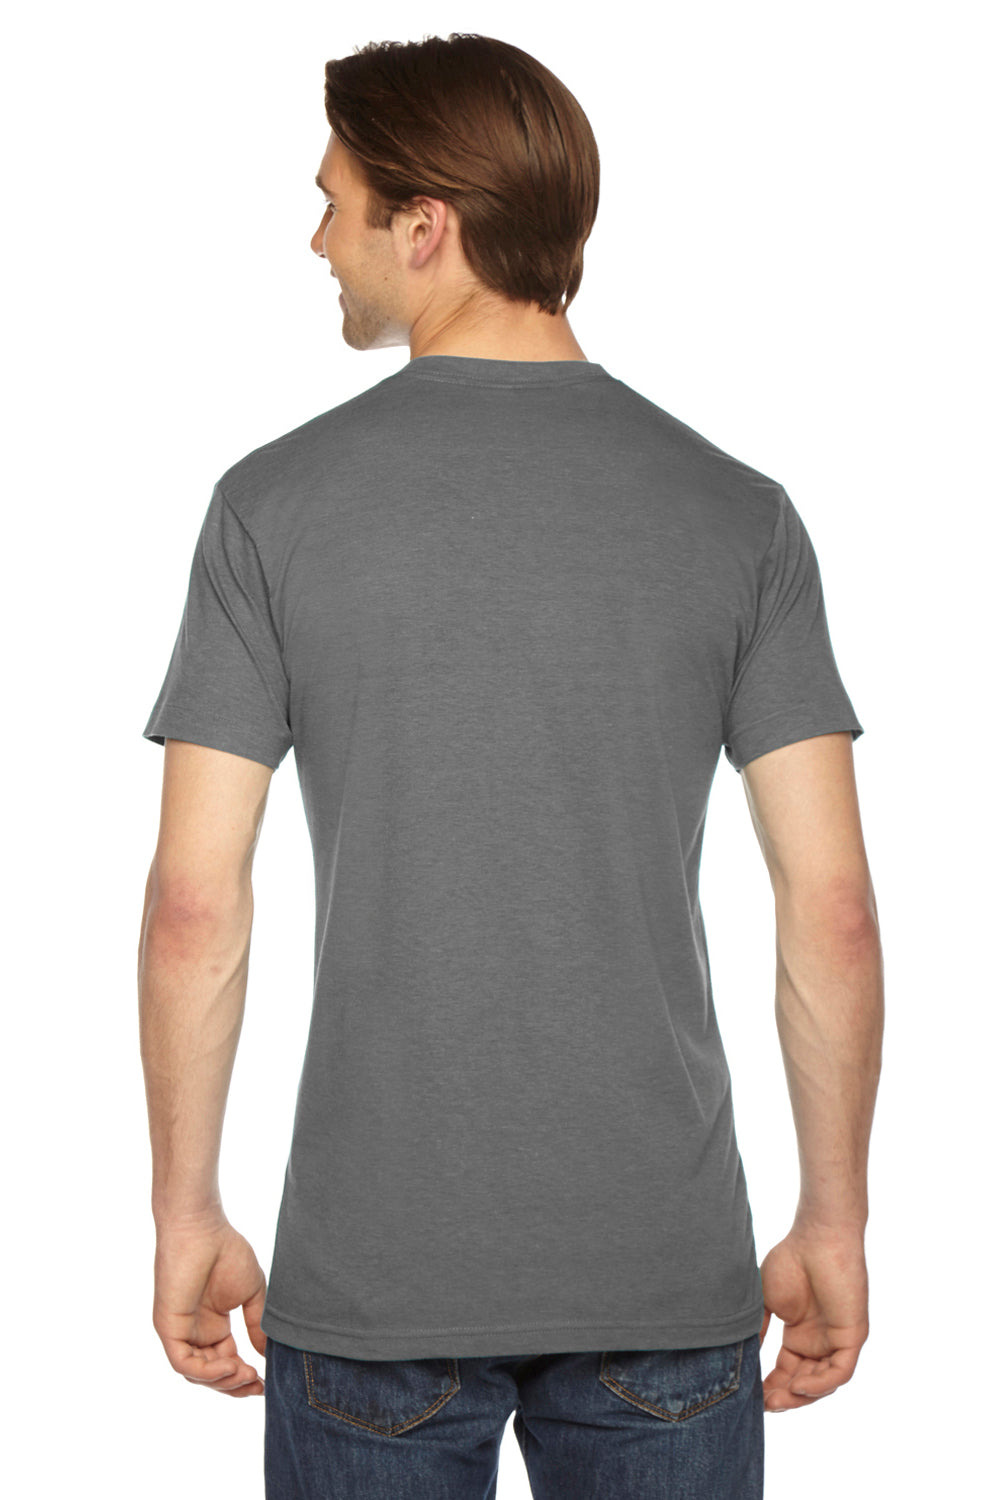 American Apparel TR401 Mens USA Made Track Short Sleeve Crewneck T-Shirt Athletic Grey Back